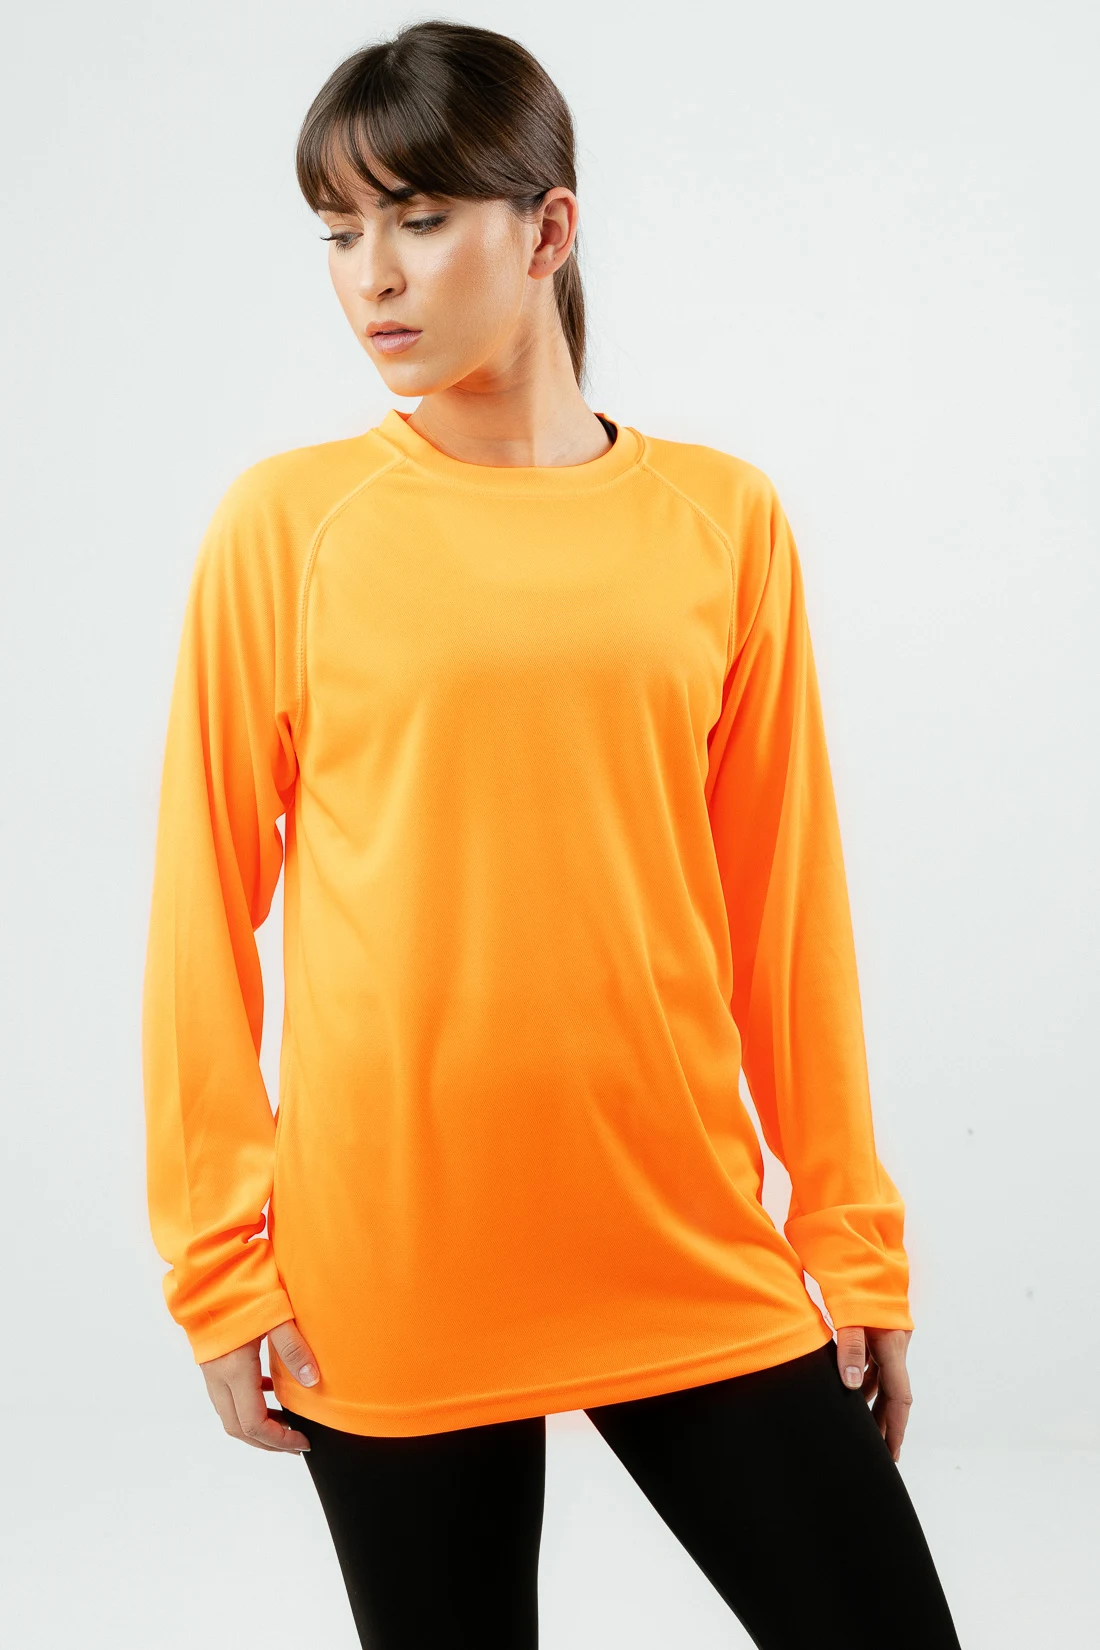 Camiseta Duria - Laranja Flúor